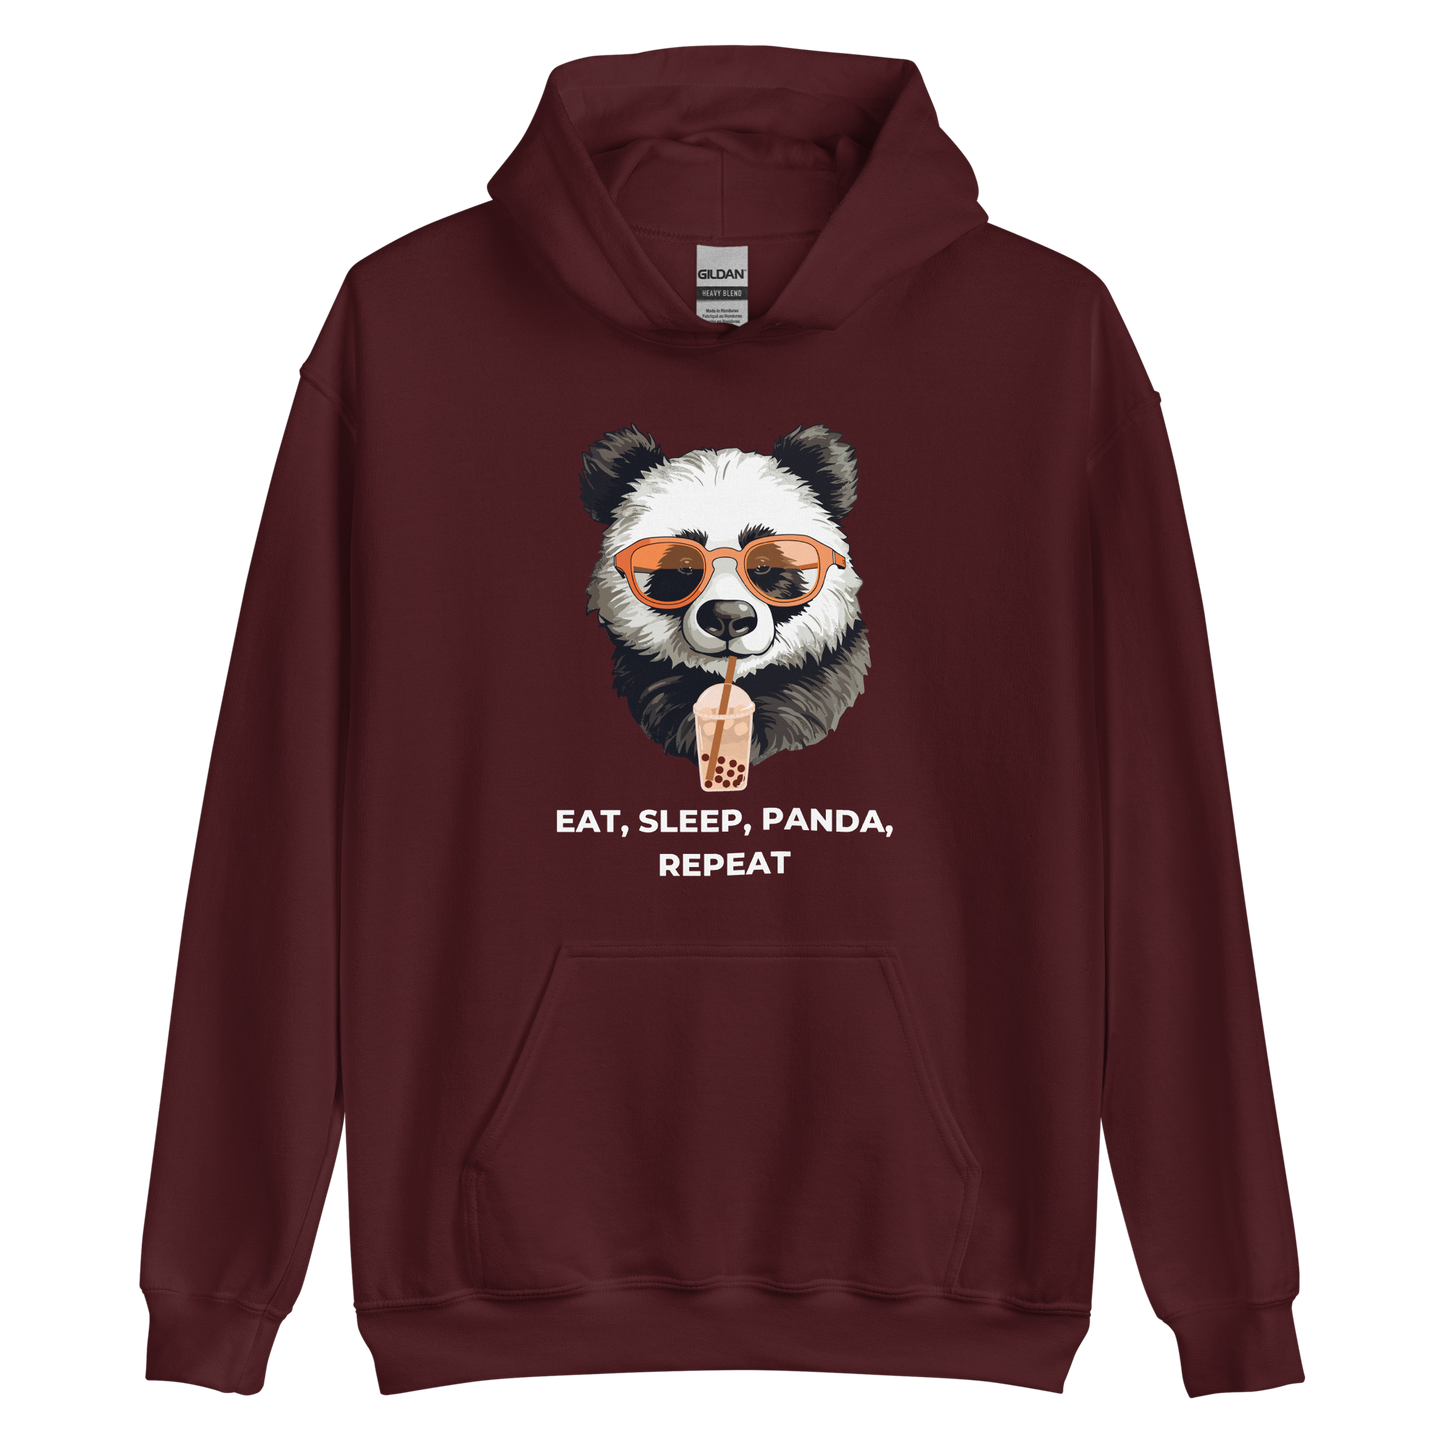 Maroon Panda Hoodie featuring the hilarious Eat, Sleep, Panda, Repeat graphic on the chest - Funny Graphic Panda Hoodies - Boozy Fox